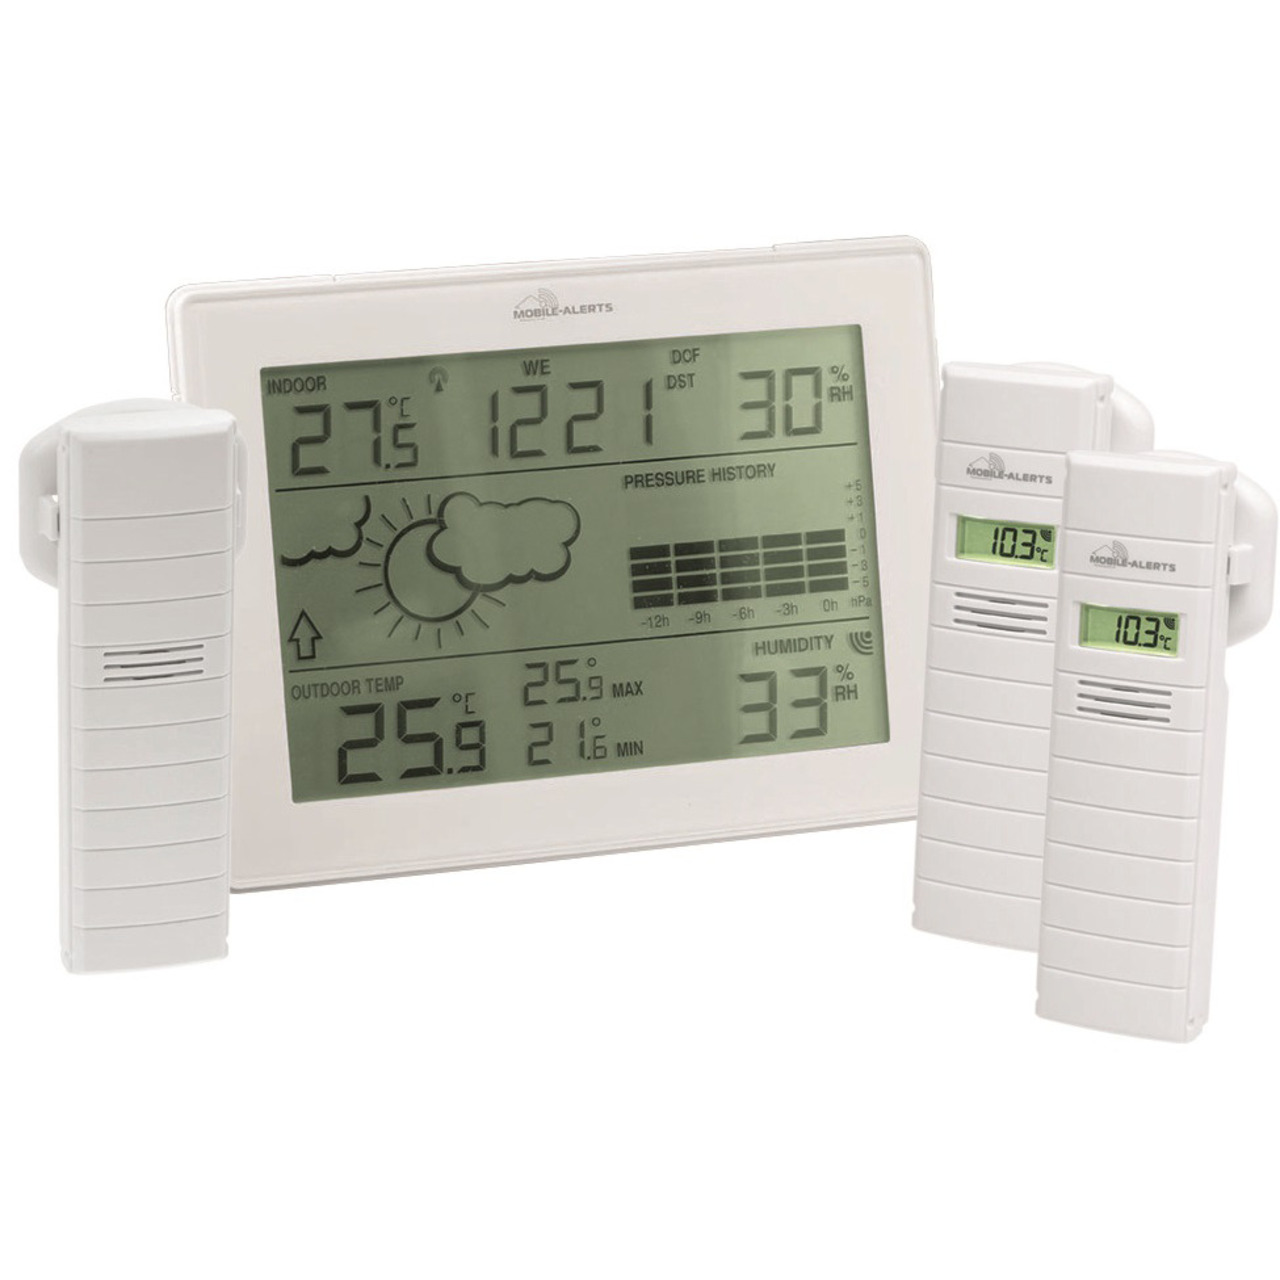 Mobile Alerts Zusatzsensoren-Spar-Set: Wetterstation MA10410- inkl- 3x Thermo-Hygrosensor unter Klima - Wetter - Umwelt